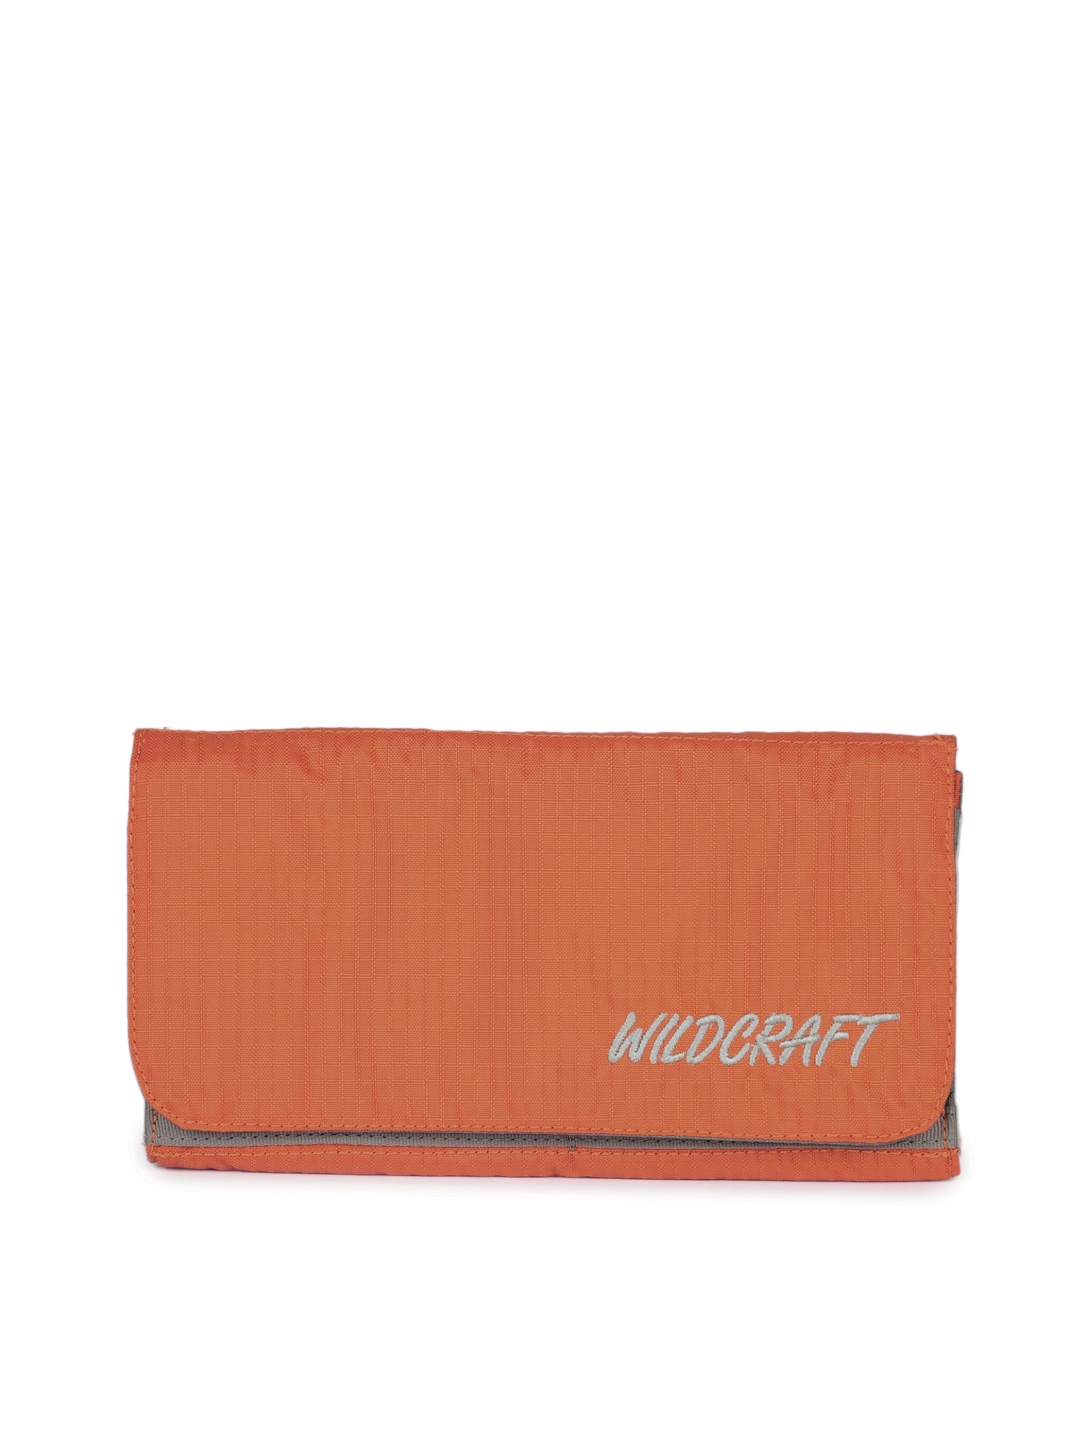 Wildcraft Women Orange Wallet